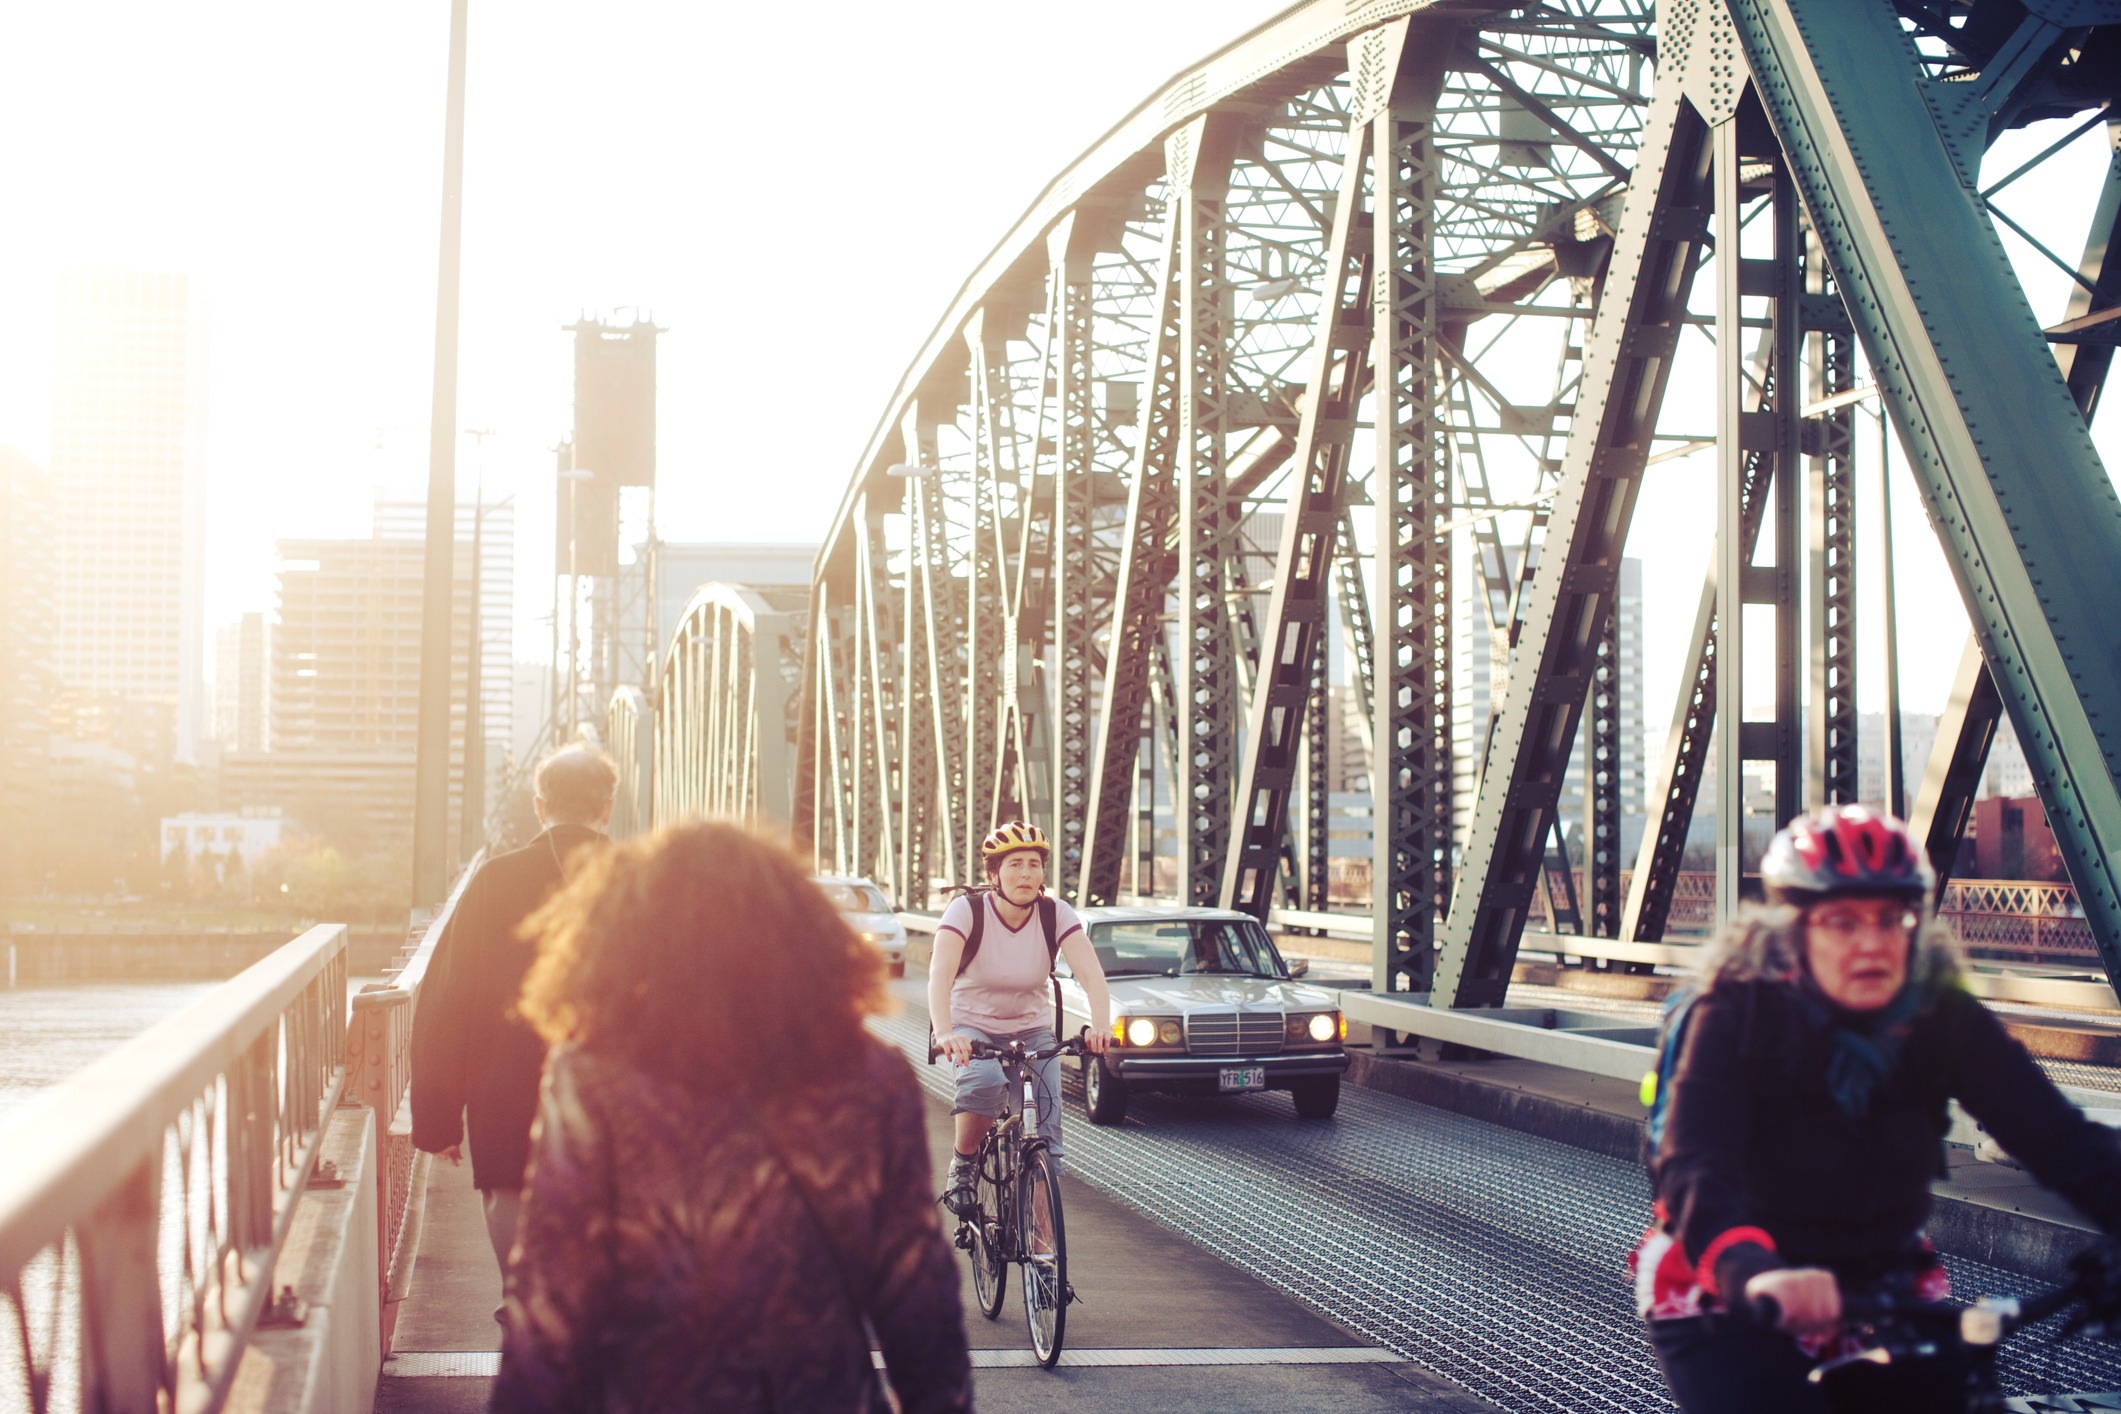 Cyclists ride on the Hawthorne Bridge in Portland.